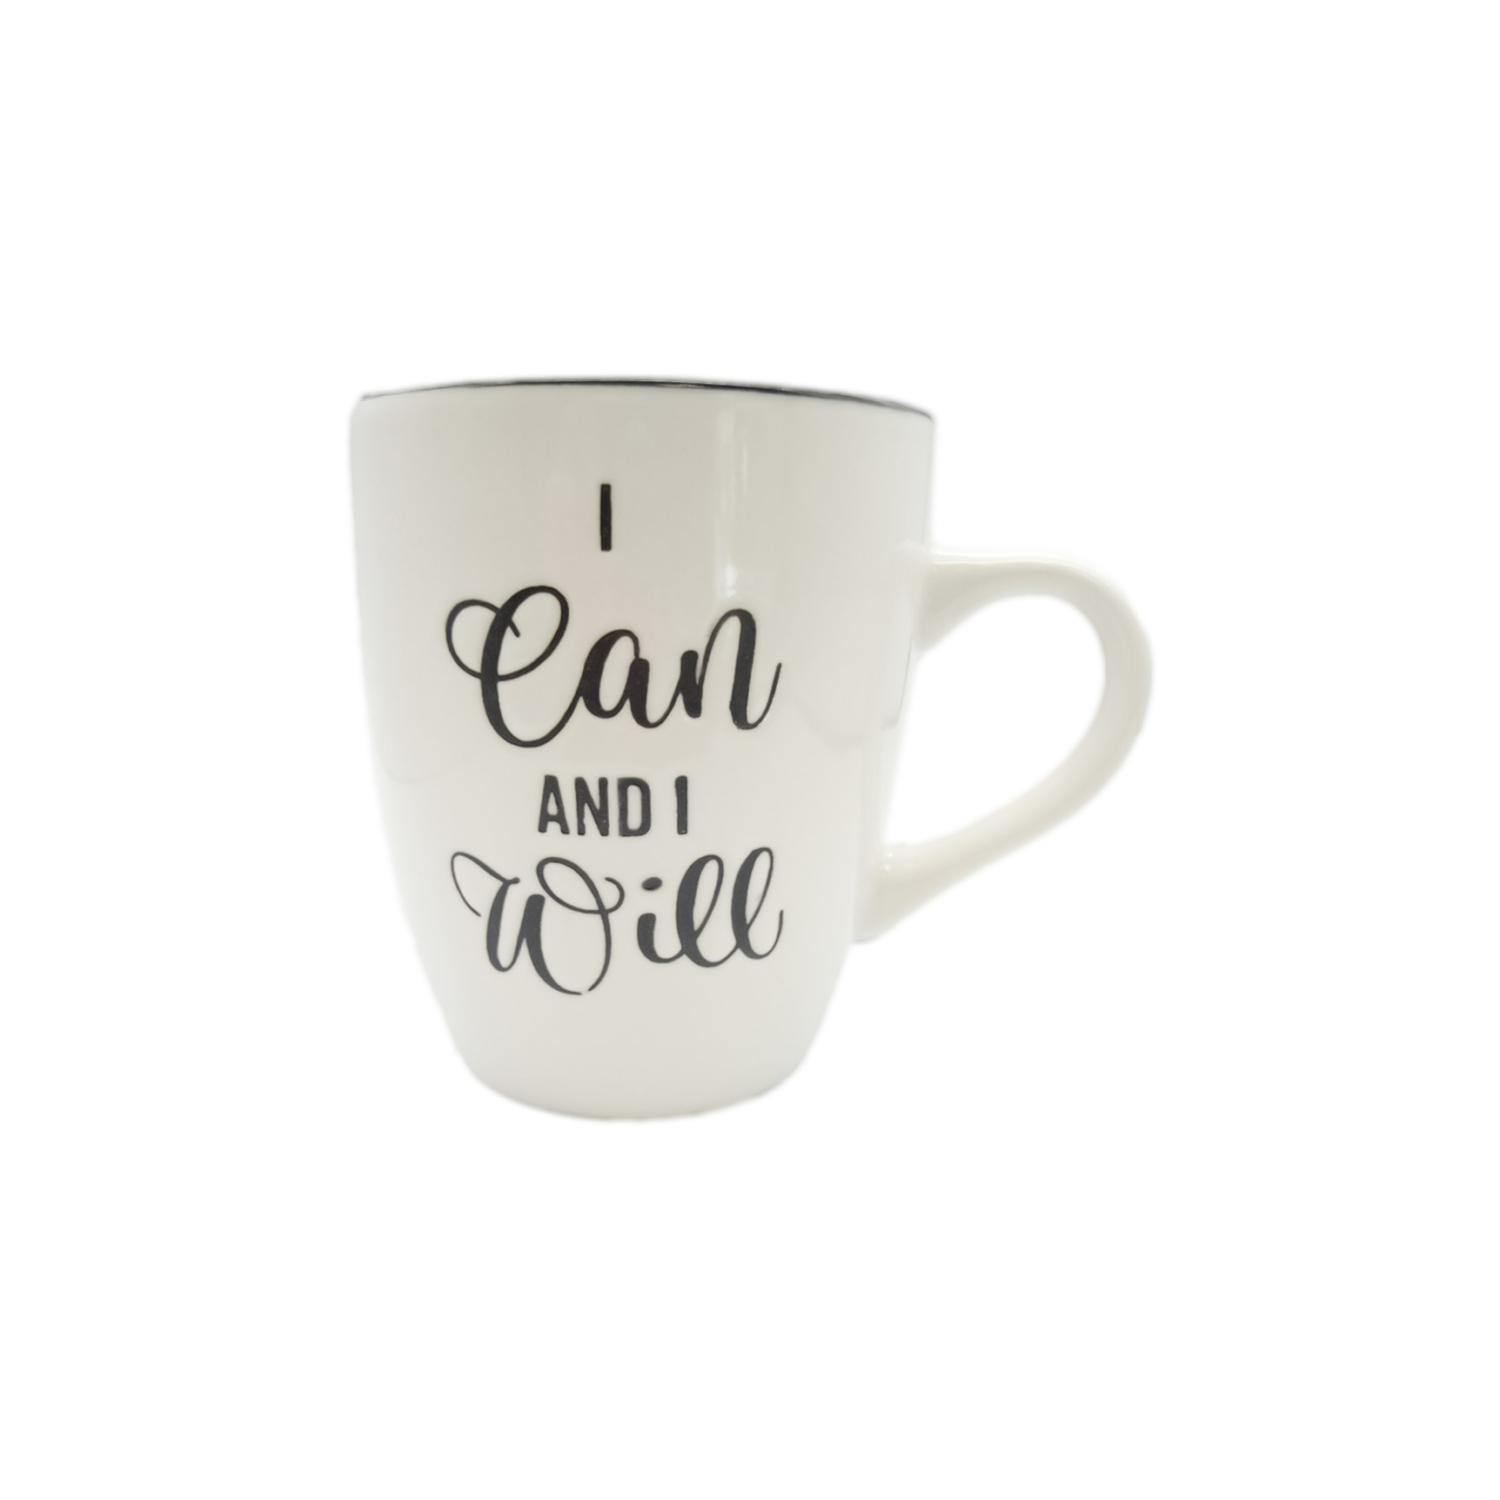 i can and i will mug